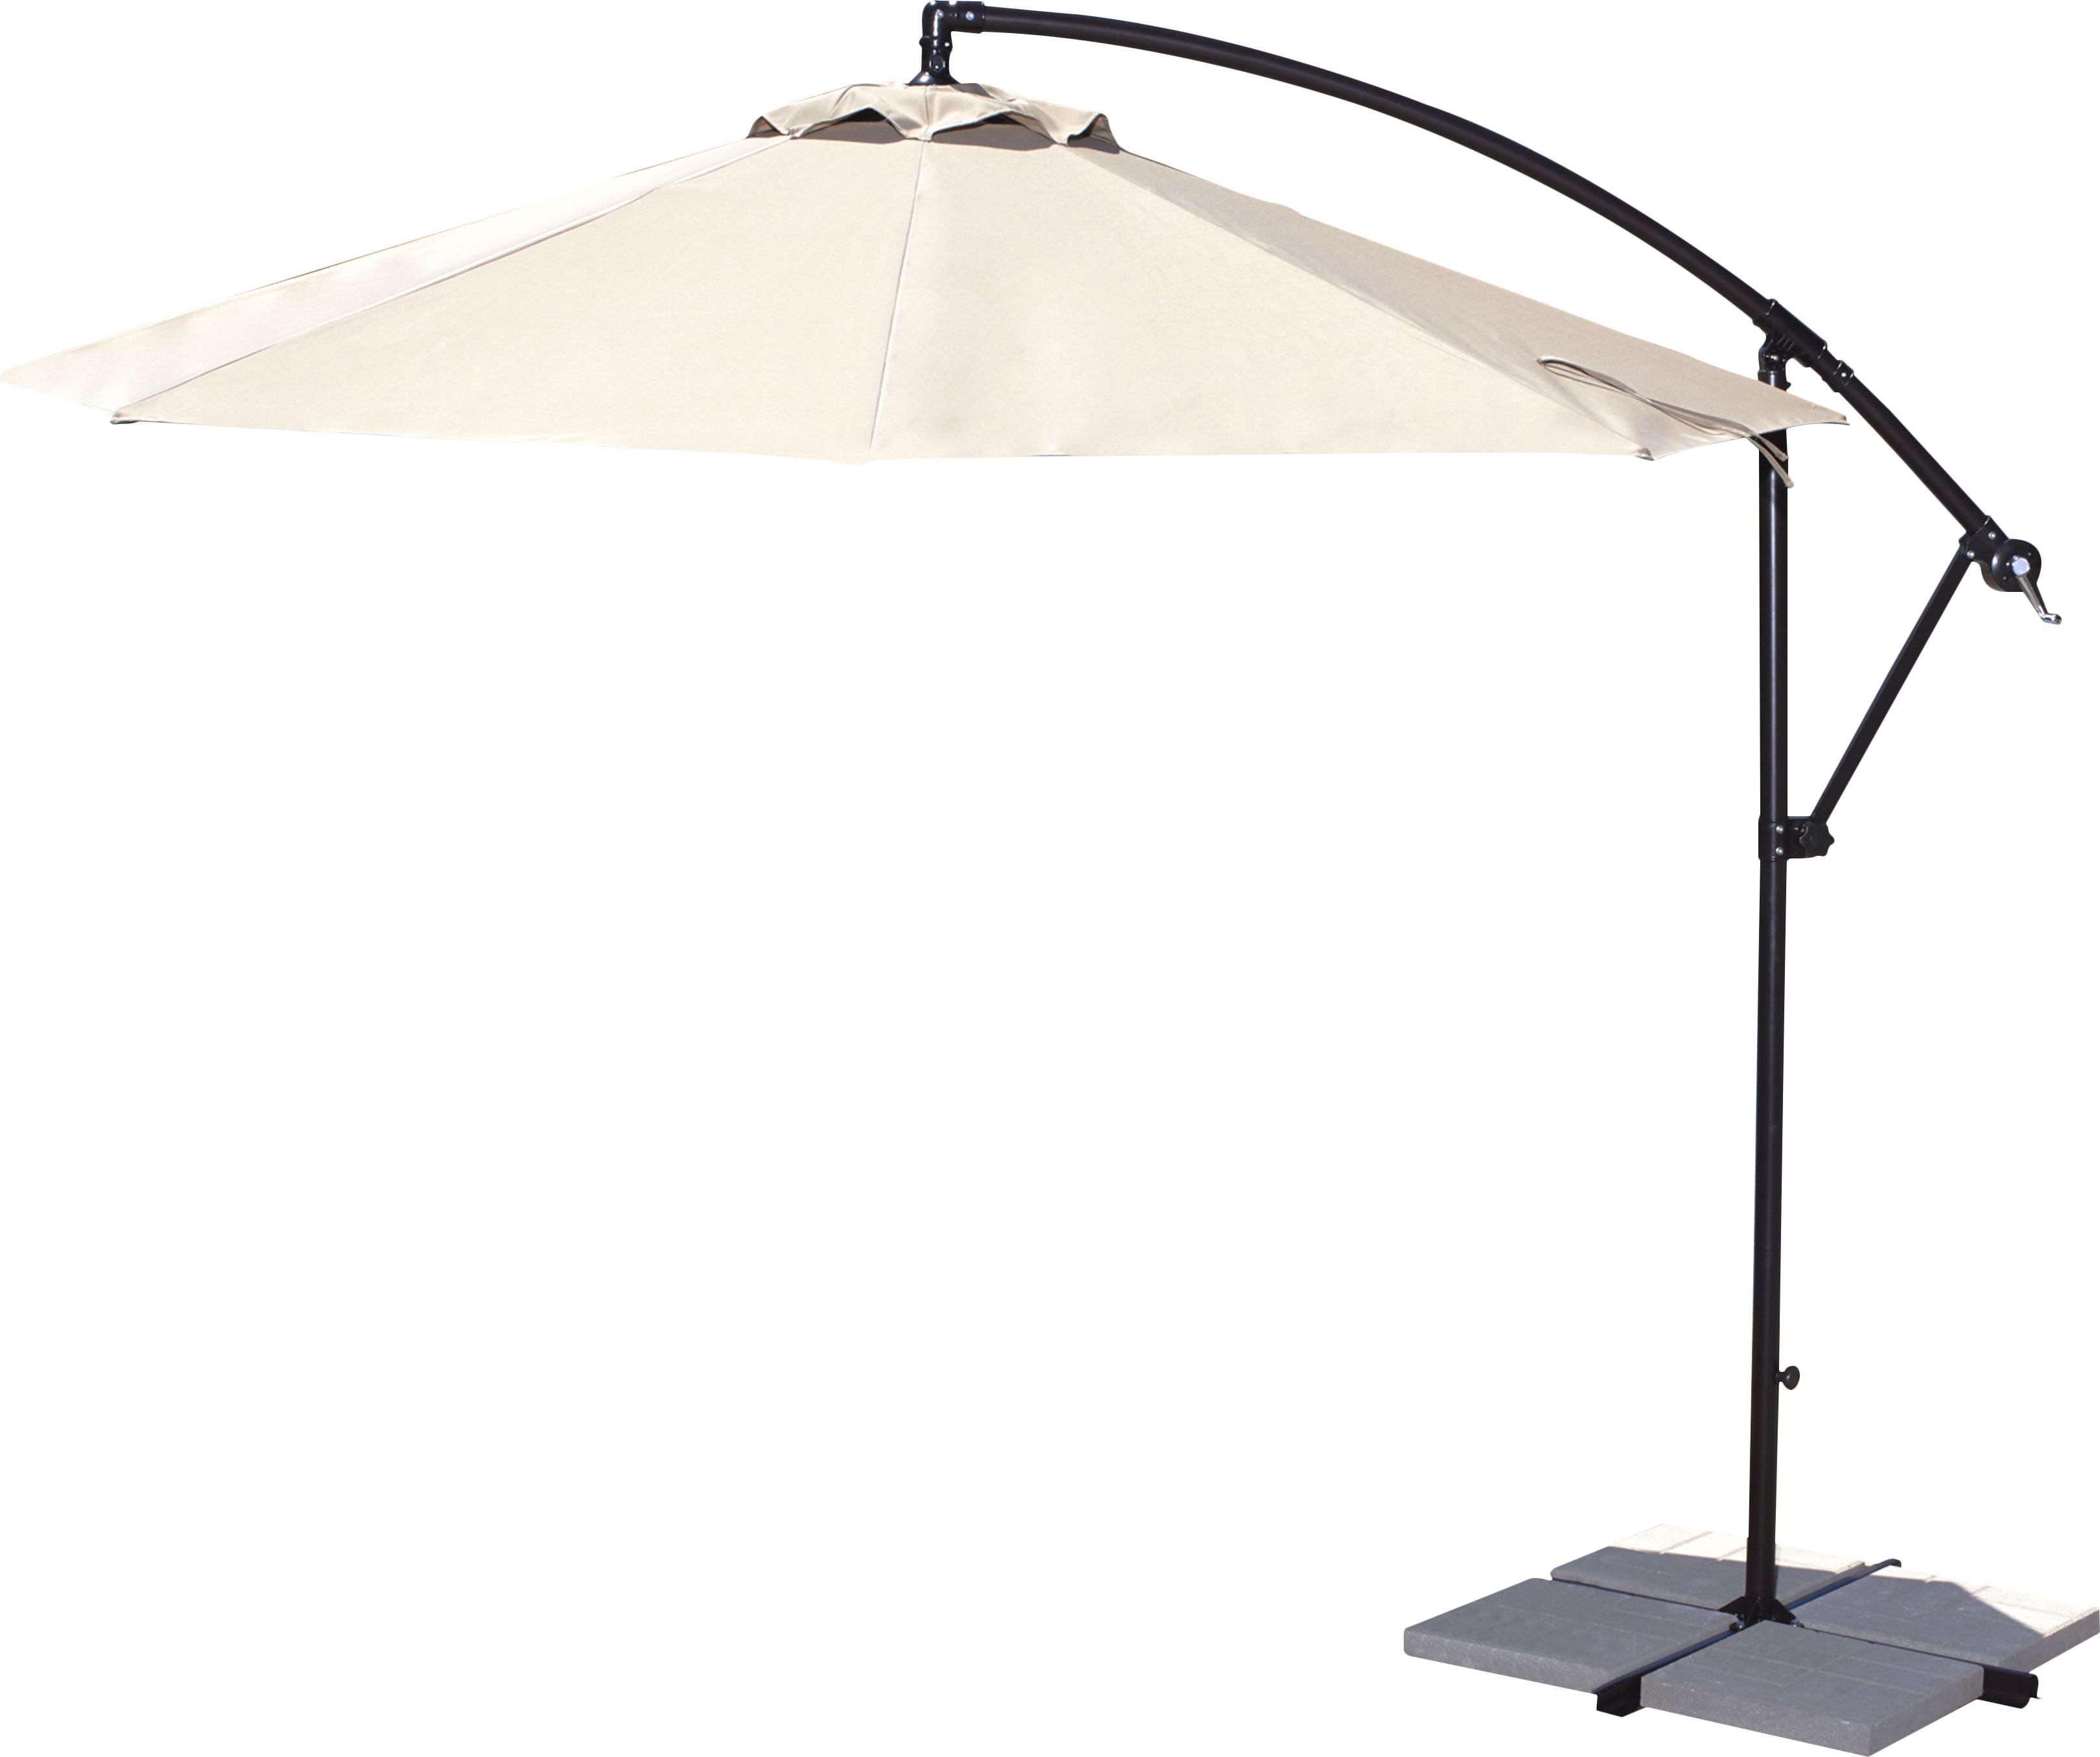 Preferred Ketcham Cantilever Umbrellas Intended For Ketcham 10' Cantilever Umbrella (View 2 of 20)